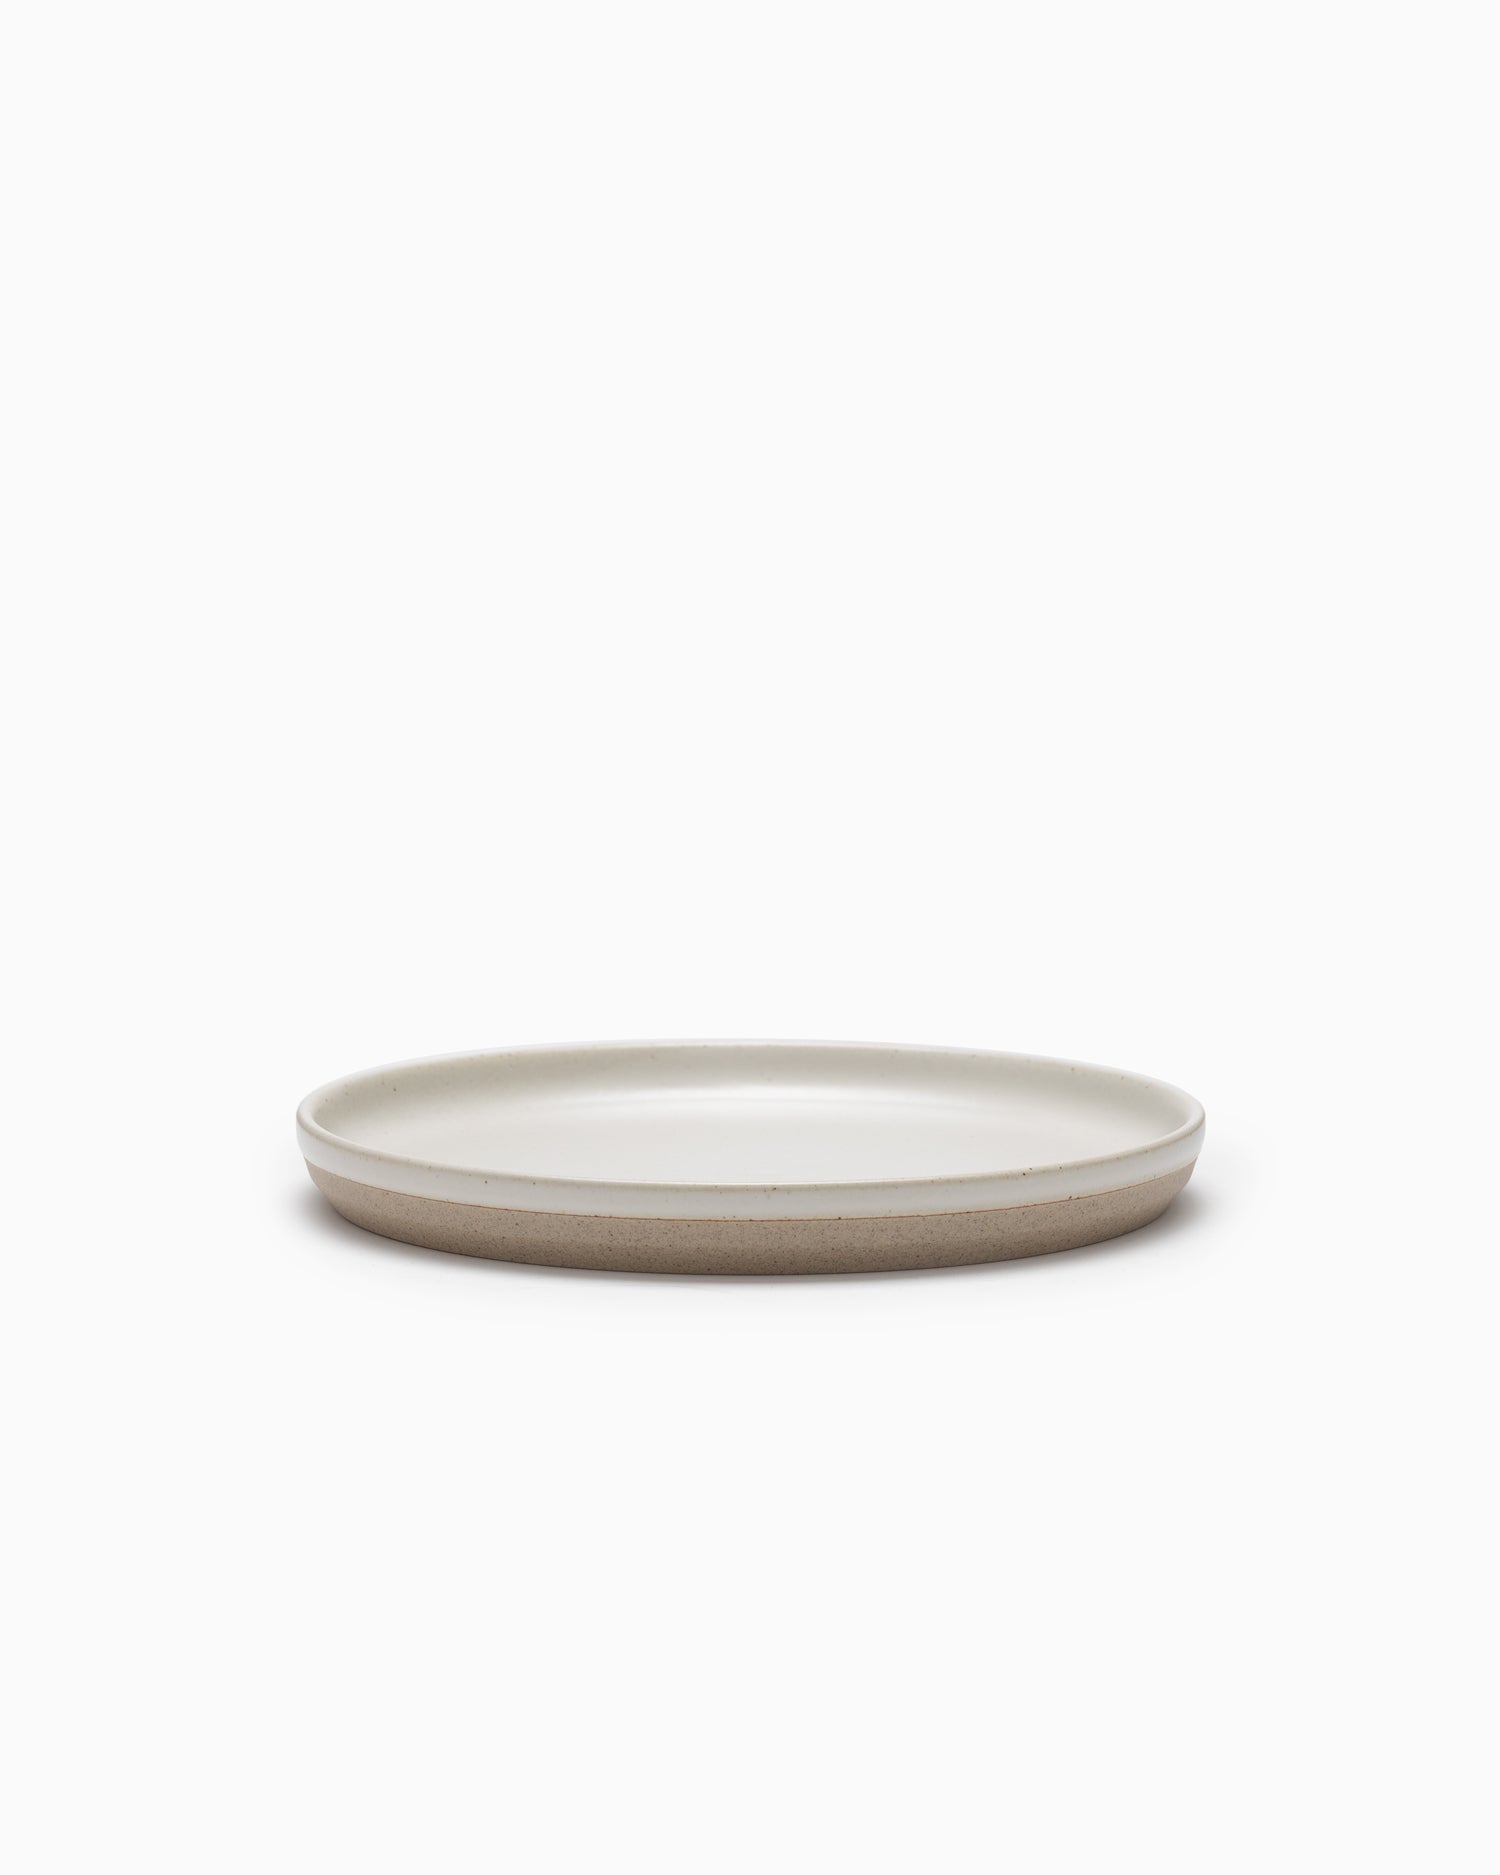 CLK-151 Small Plate - White